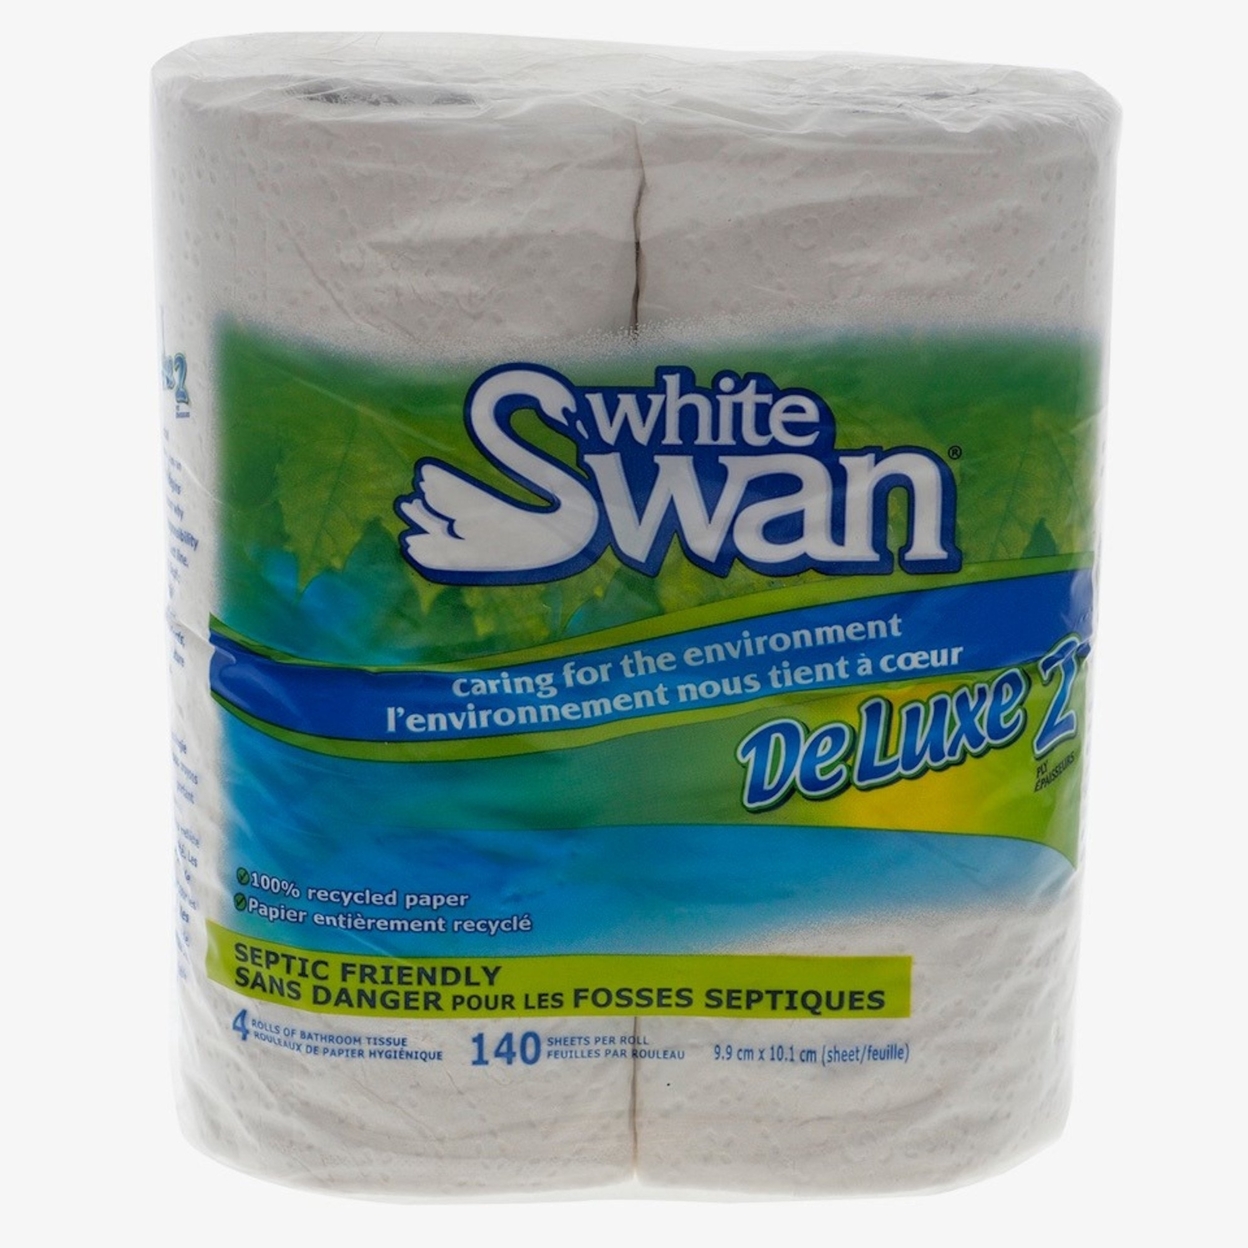 4 Rolls of White Swan Bathroom Tissue - Case of 24